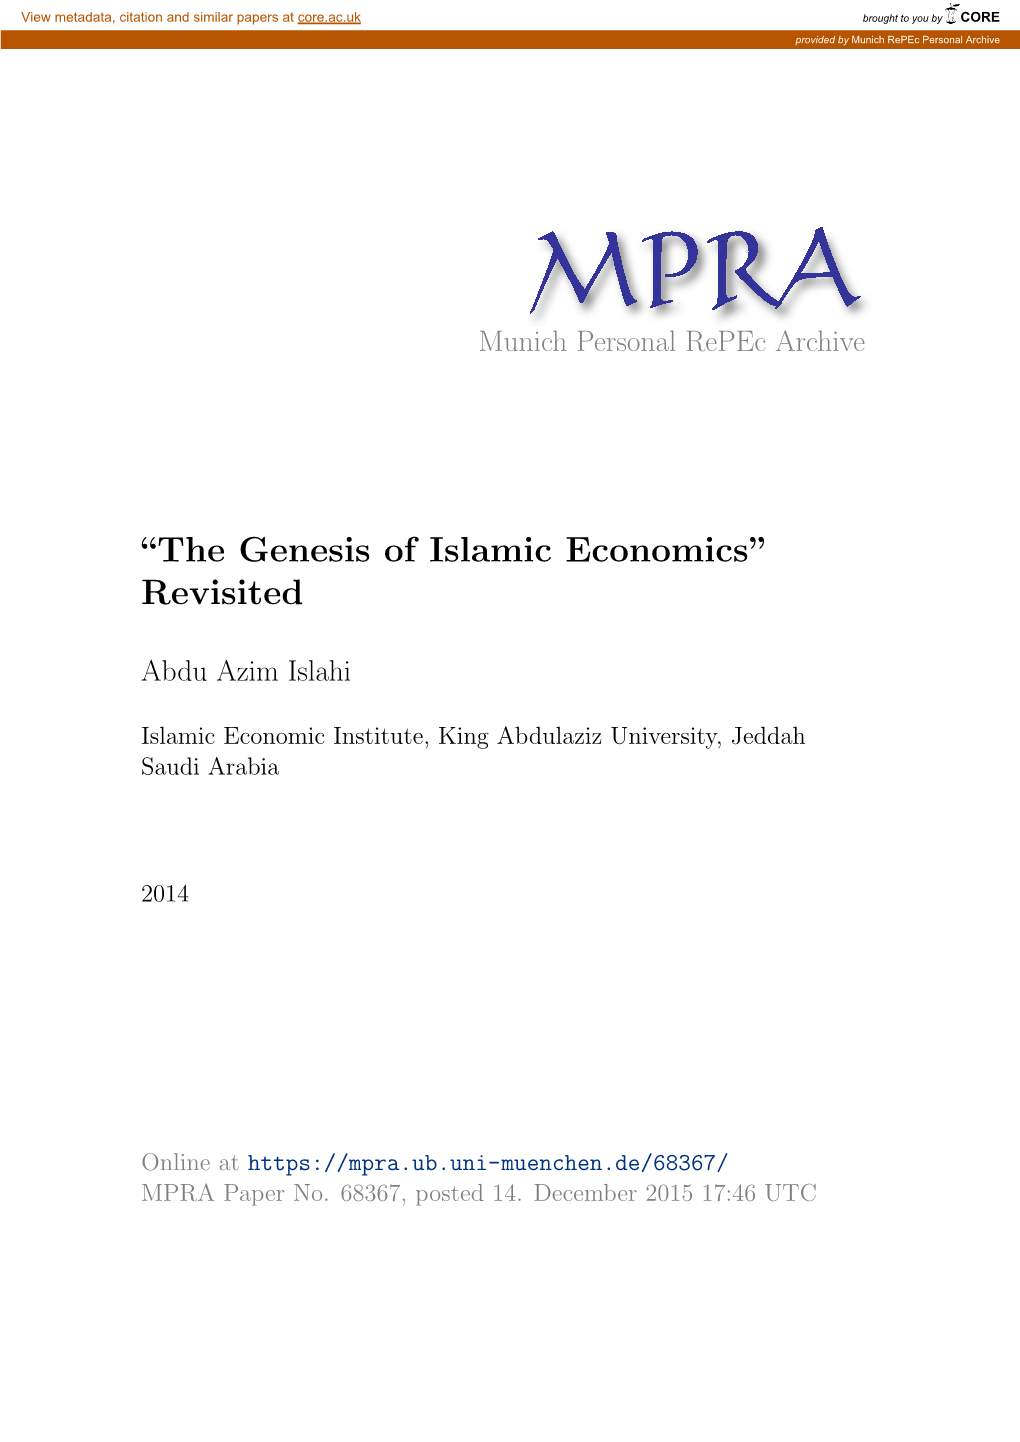 The Genesis of Islamic Economics” Revisited